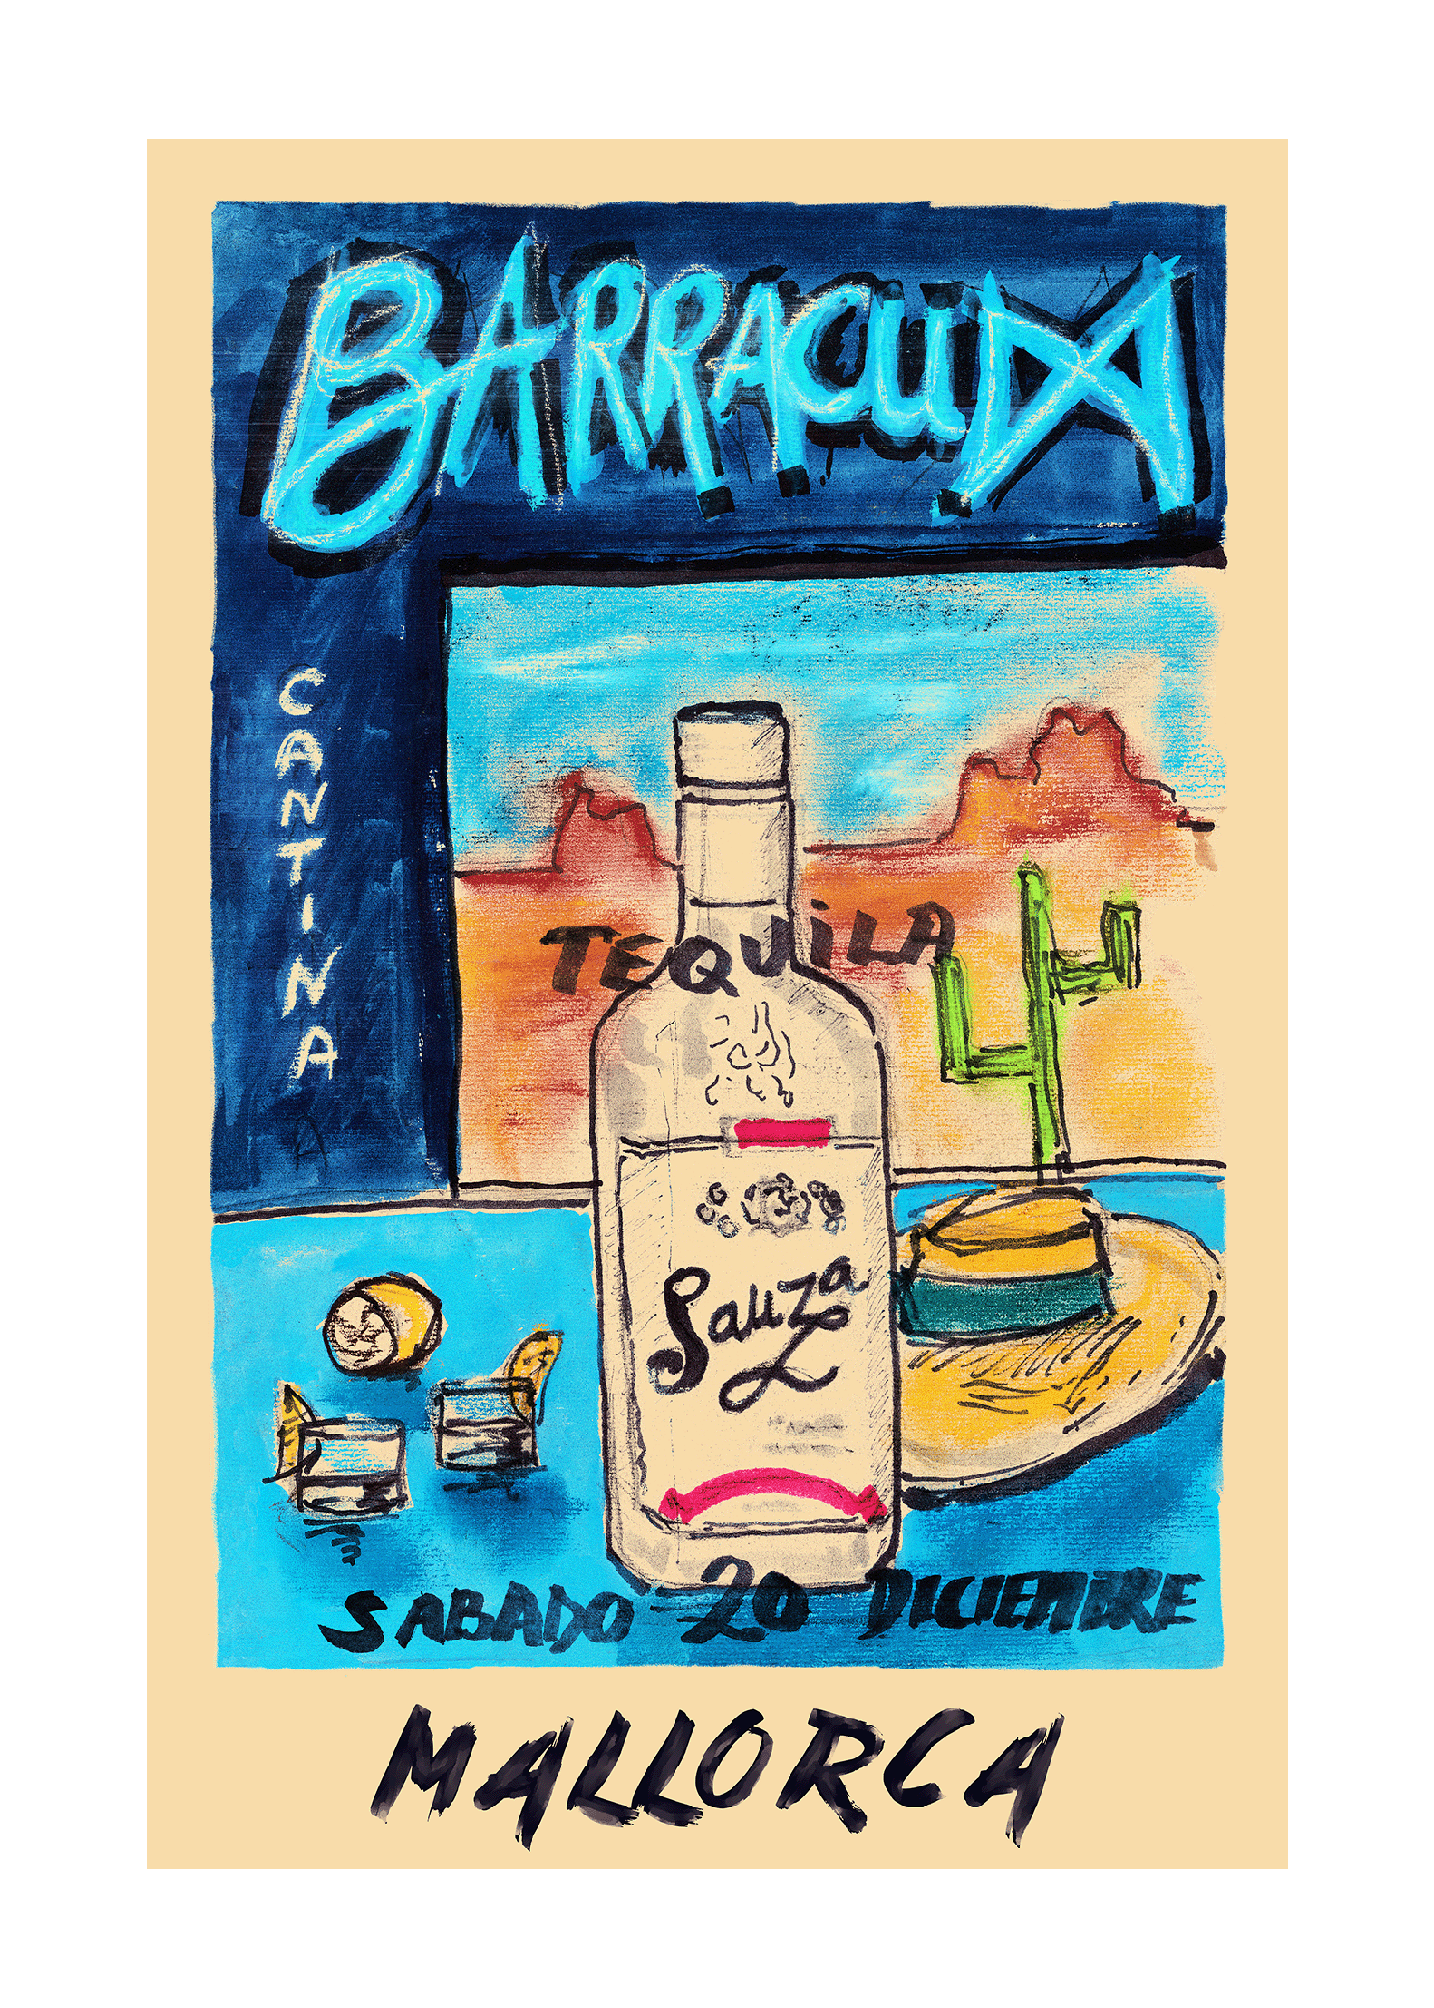 Barracuda, Cantina & Tequila, Mallorca.